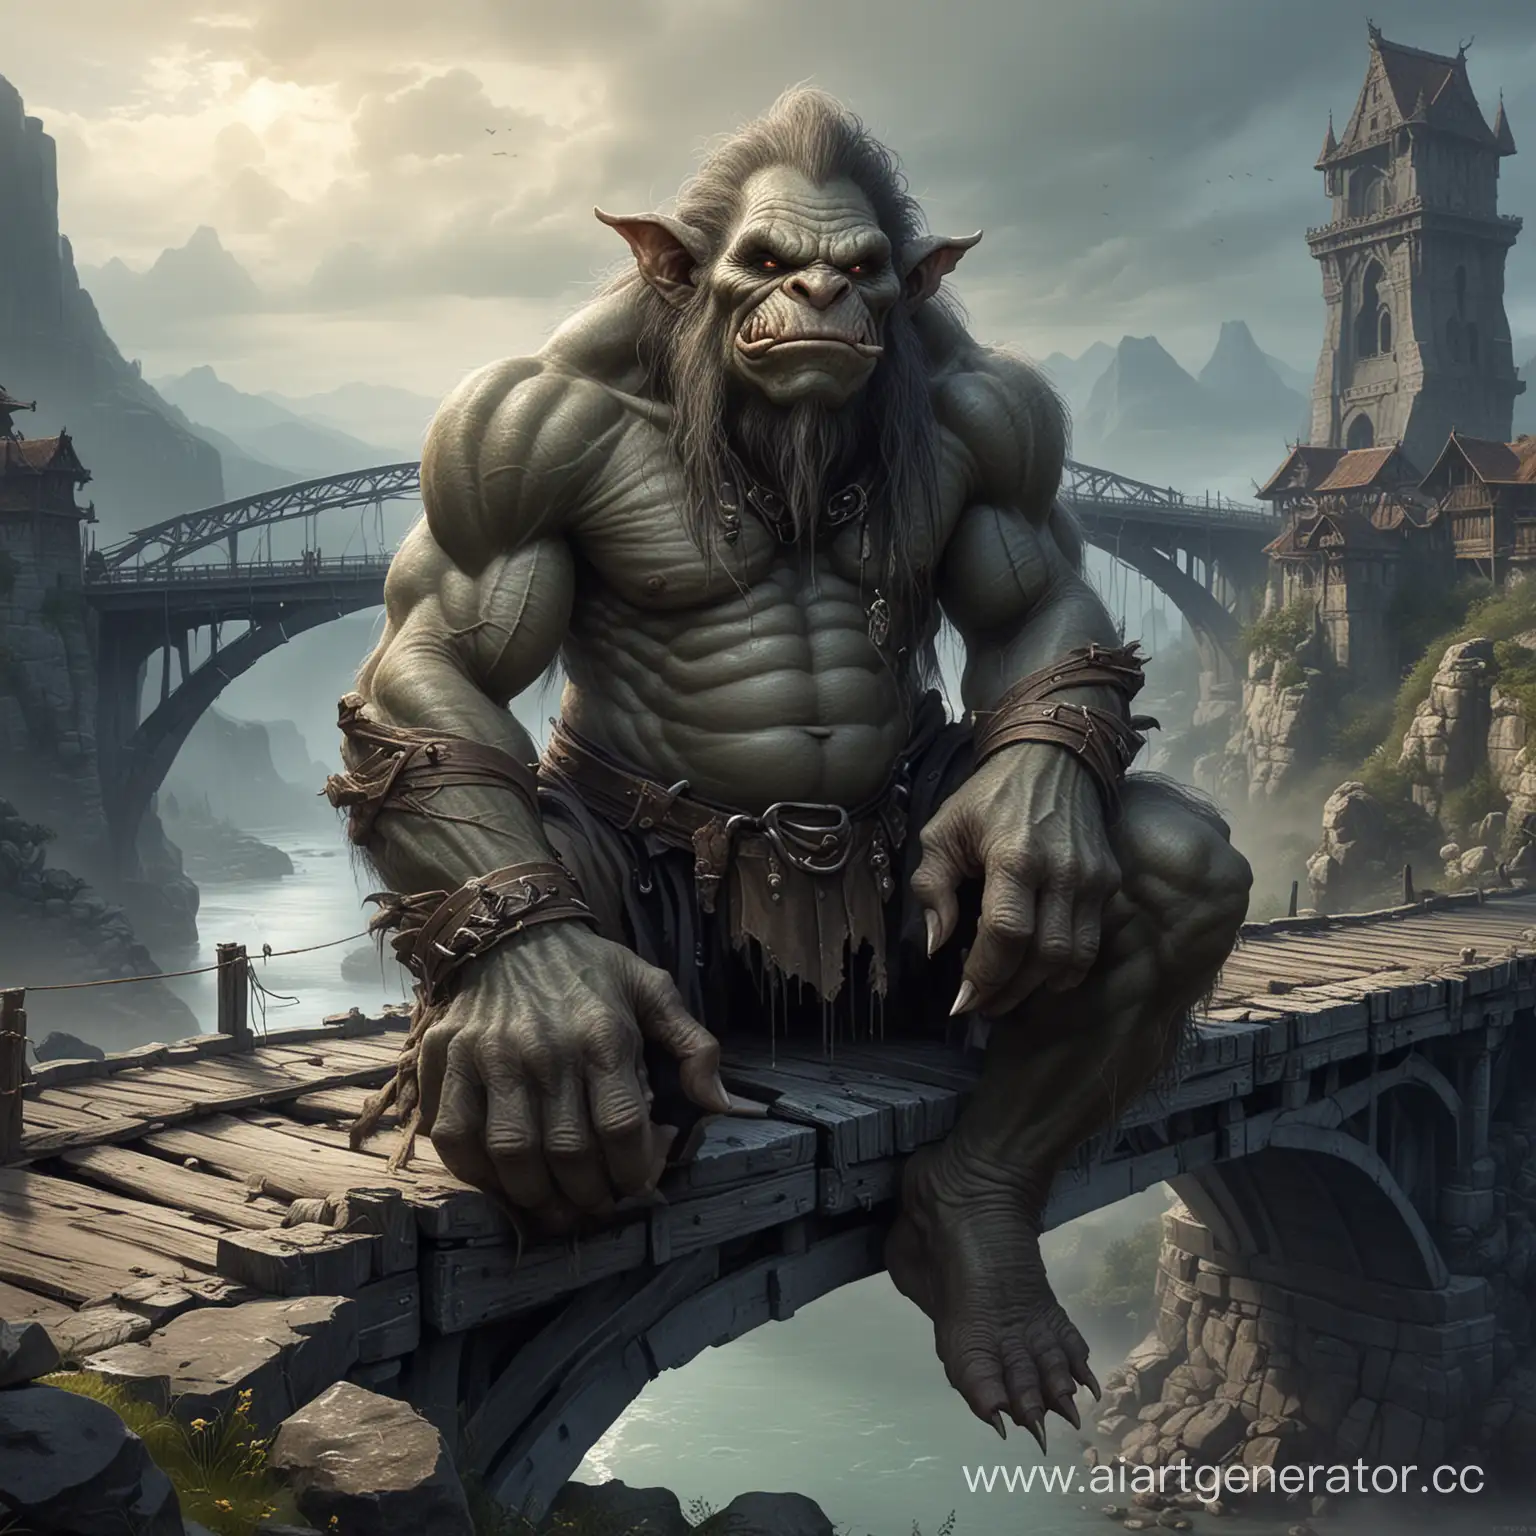 Enormous-Malevolent-Troll-Guarding-Mystic-Bridge-in-Fantasy-Landscape